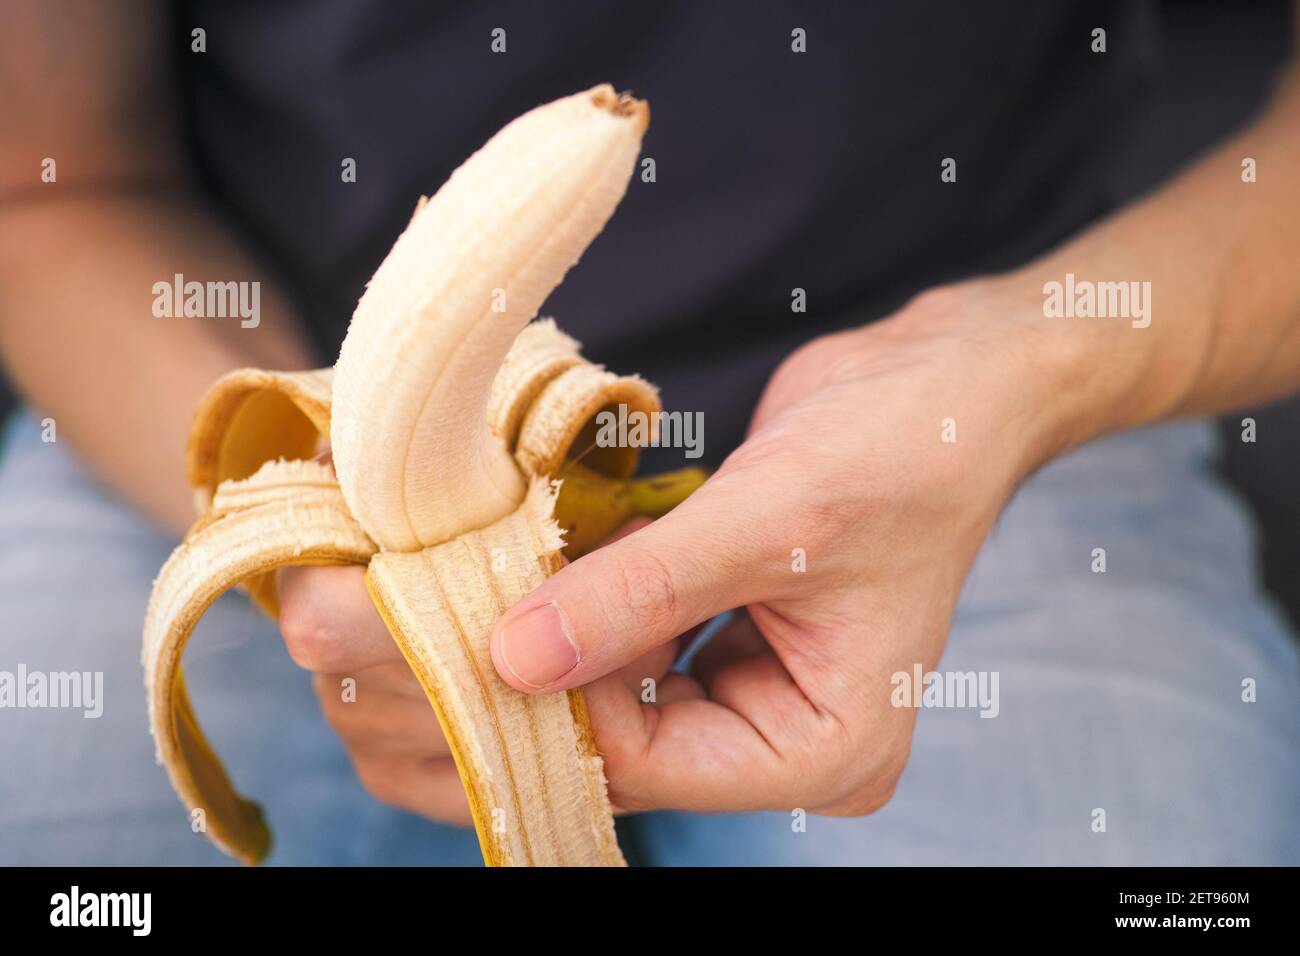 A man peeling a fresh banana. Shallow depth of field. Close up. Stock Photo